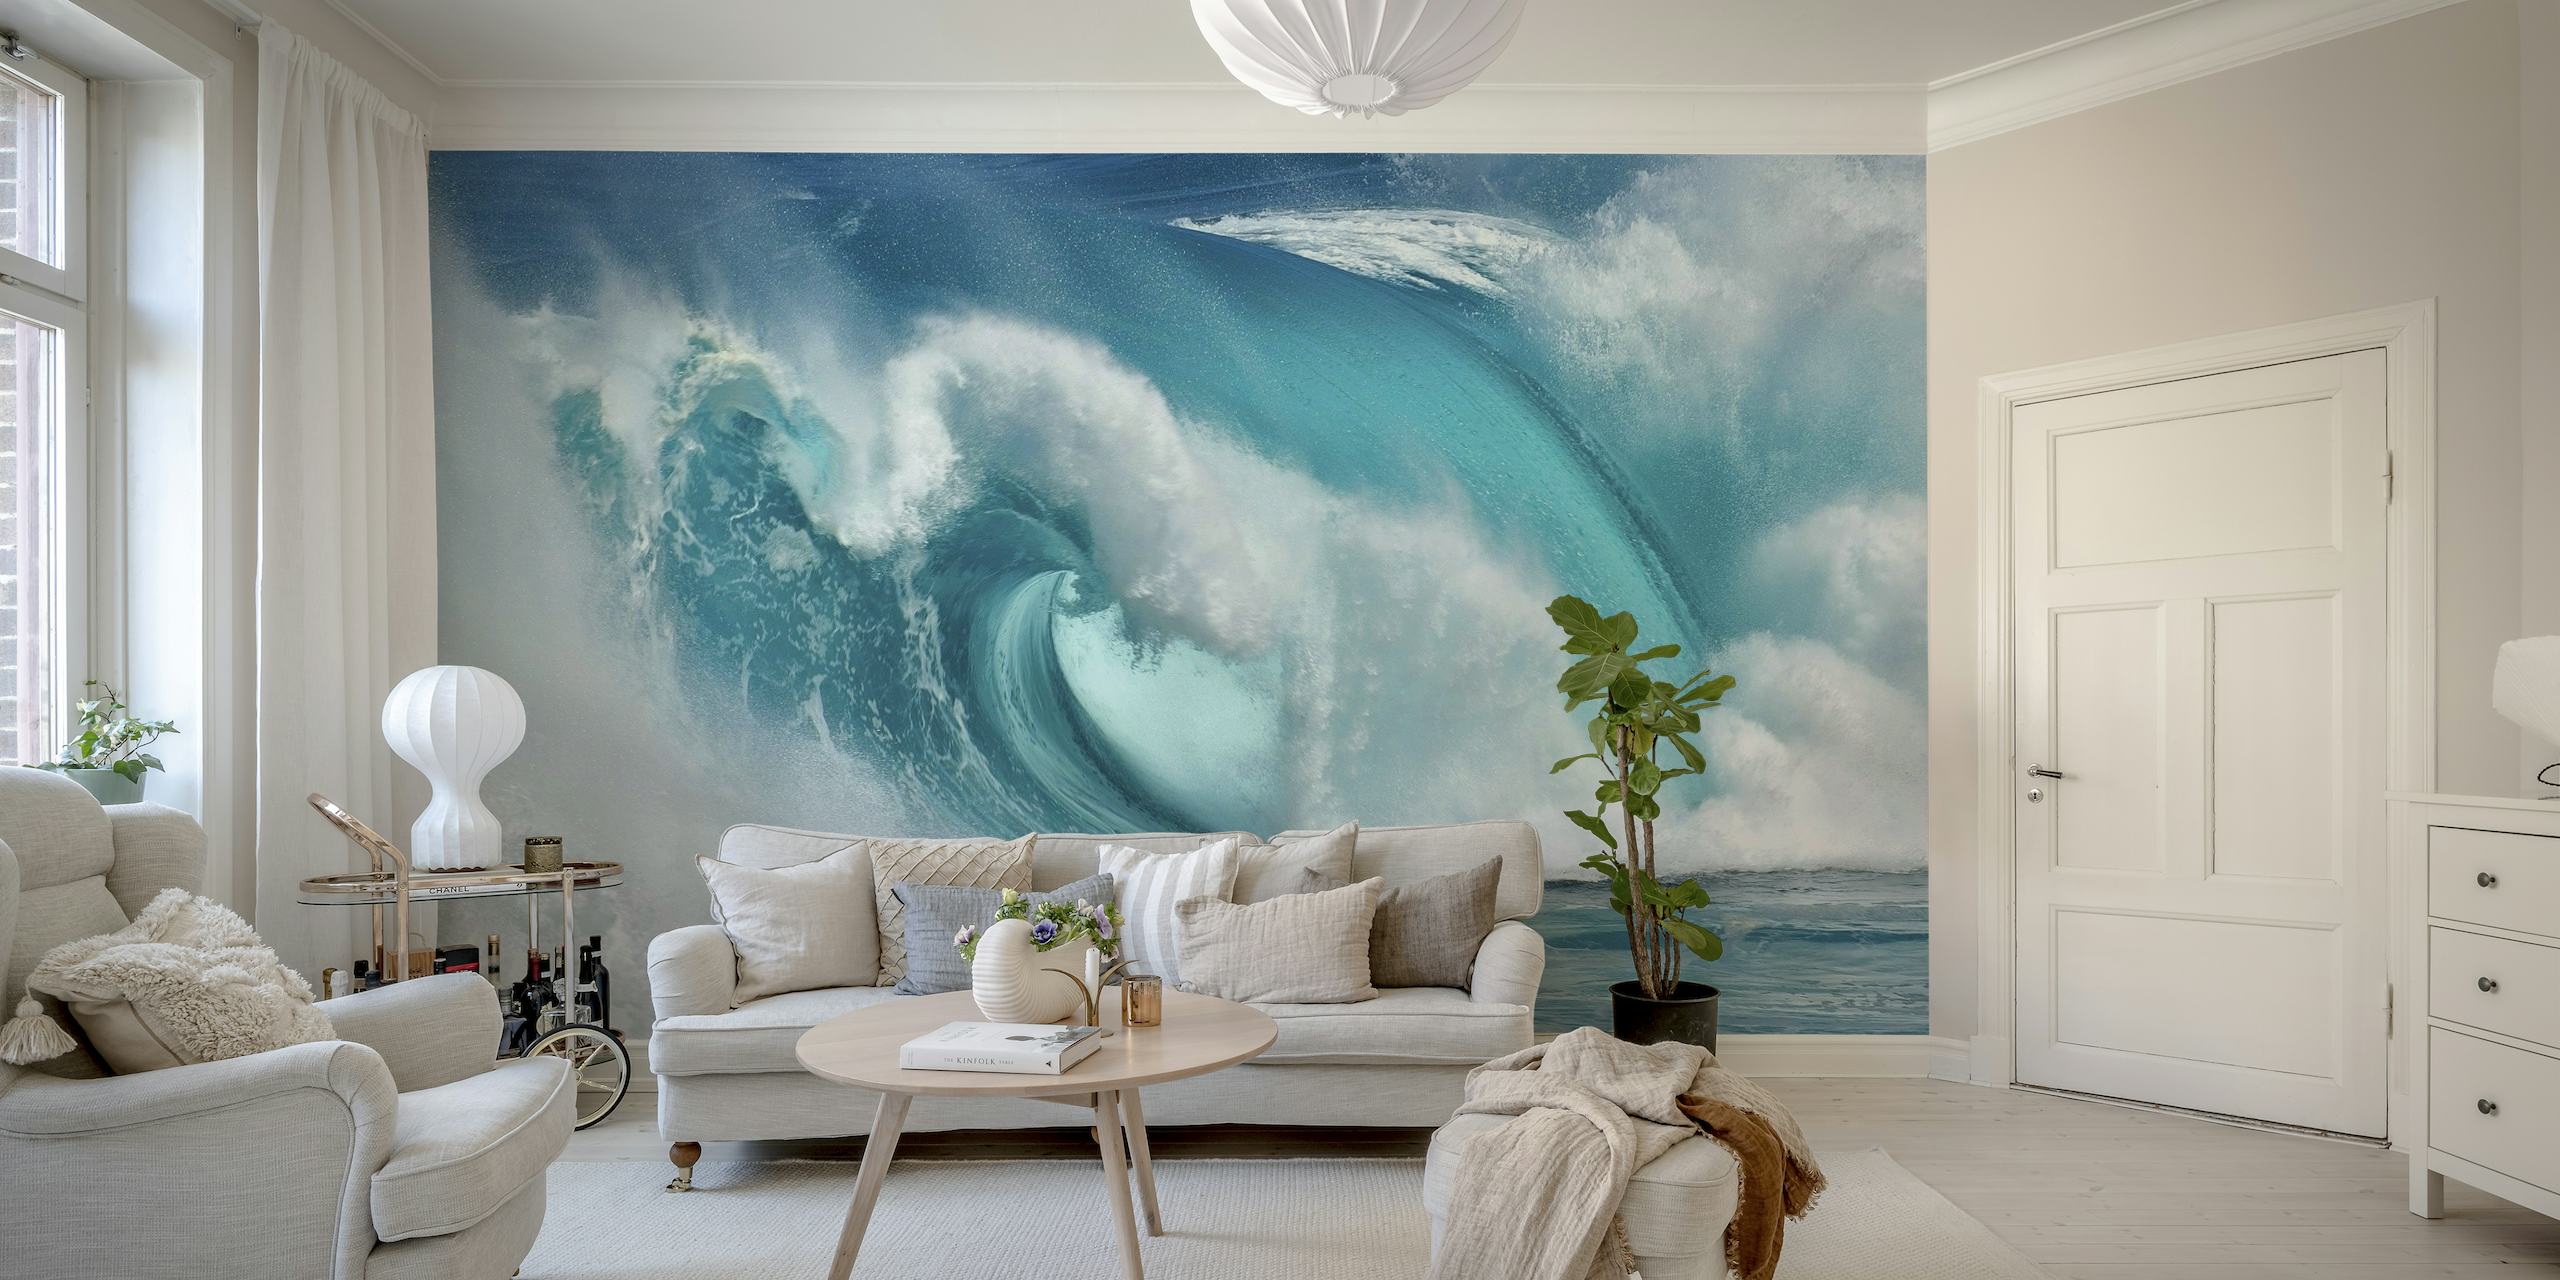 Mural abstrato de ondas do mar com efeito de fogo azul